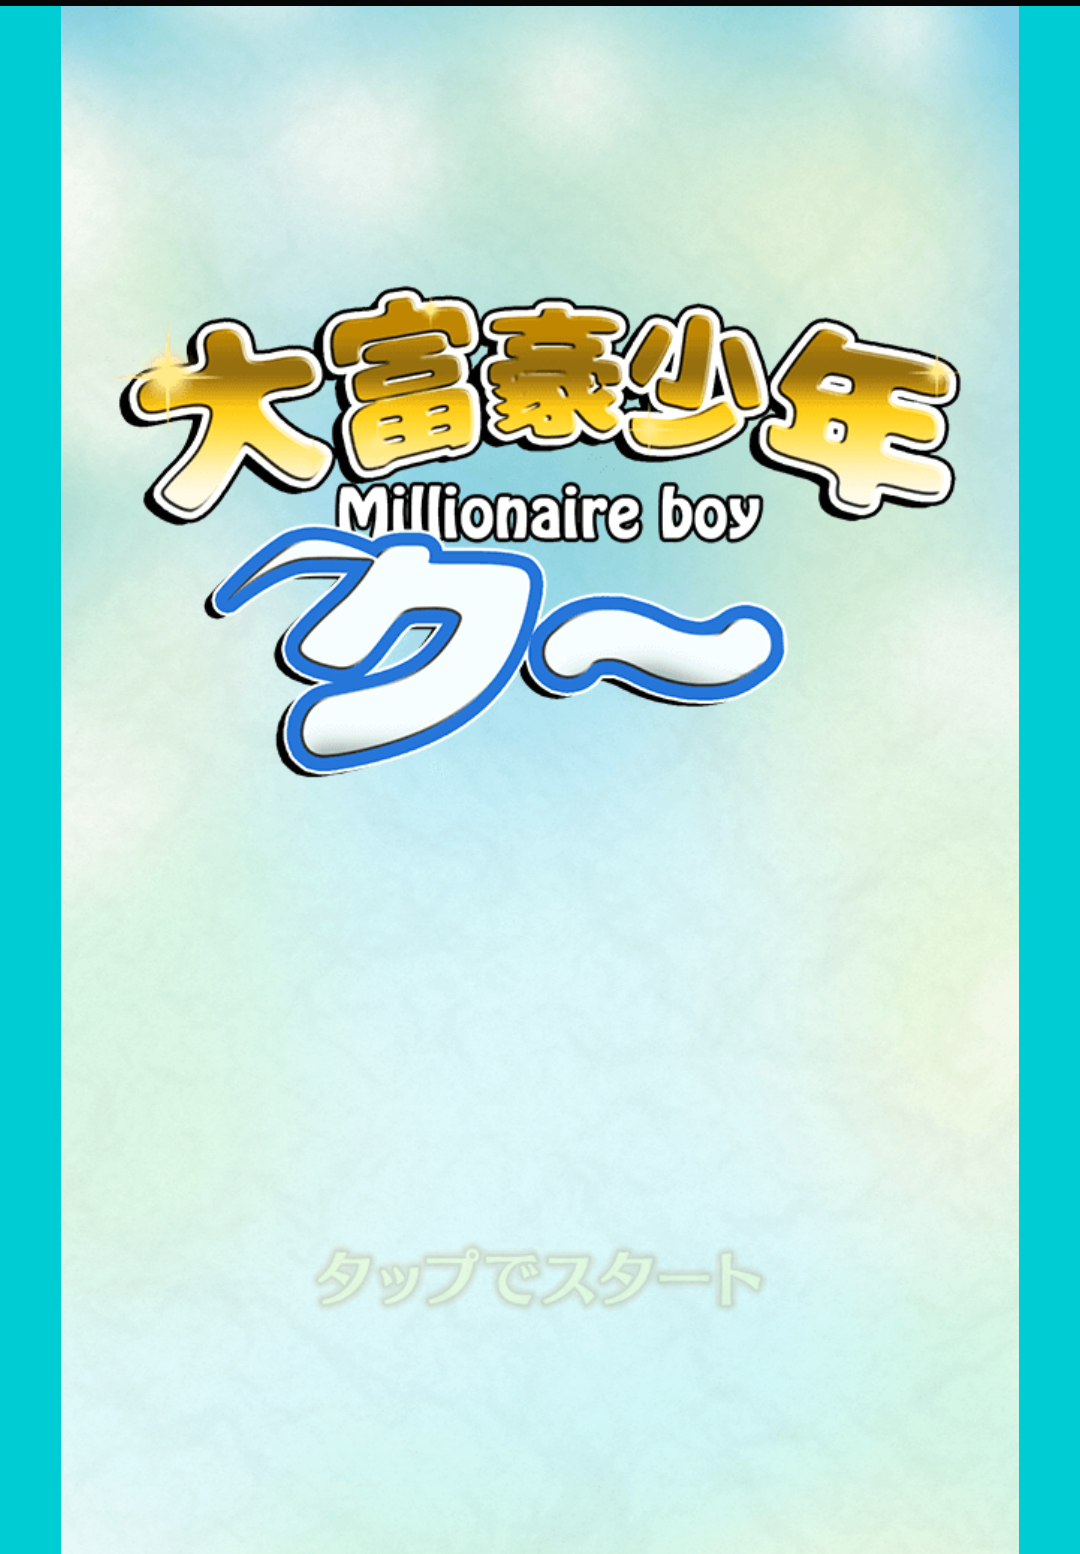 Millionaire boy Koo截图1